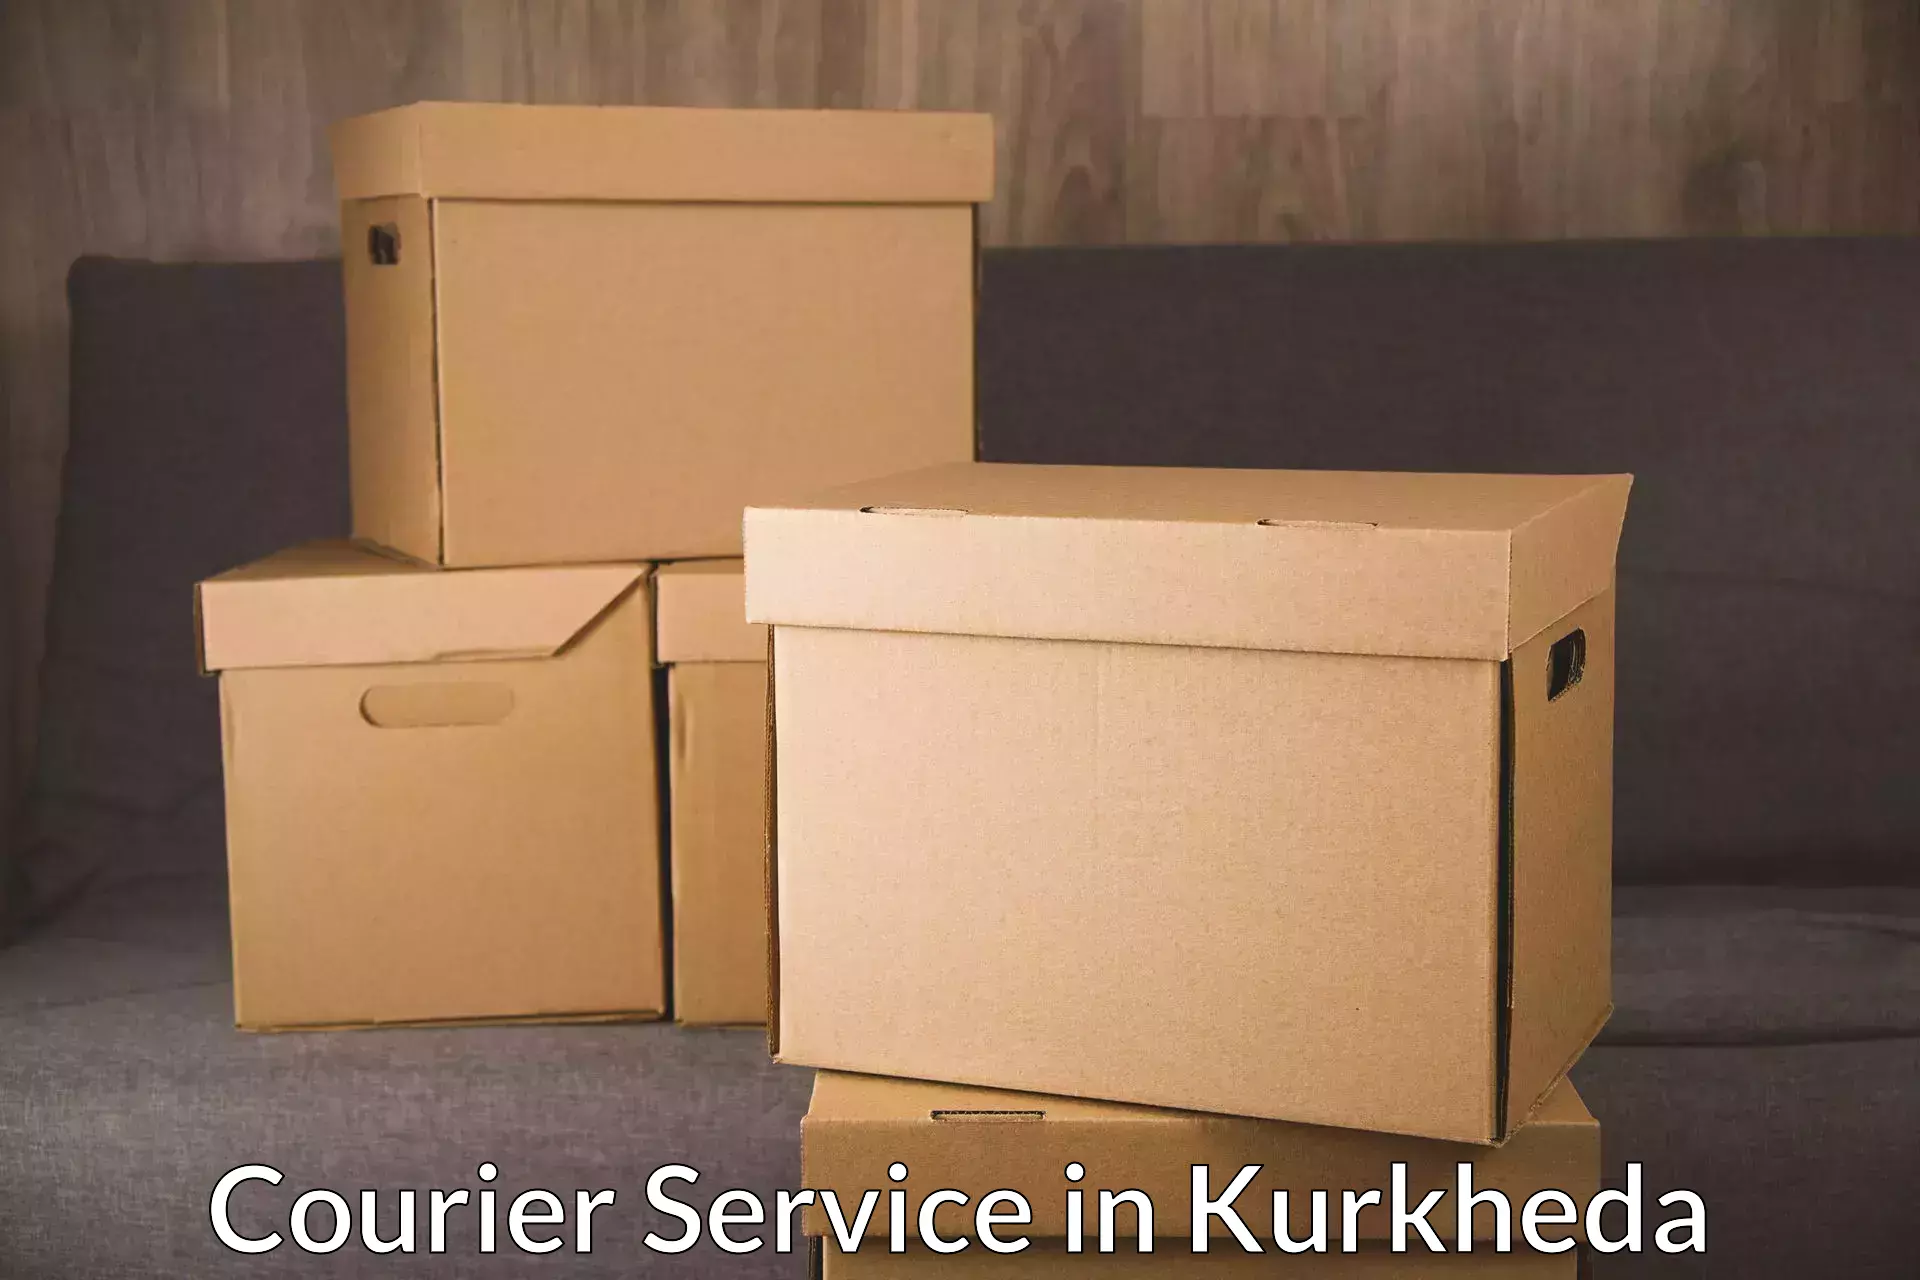 Fast delivery service in Kurkheda